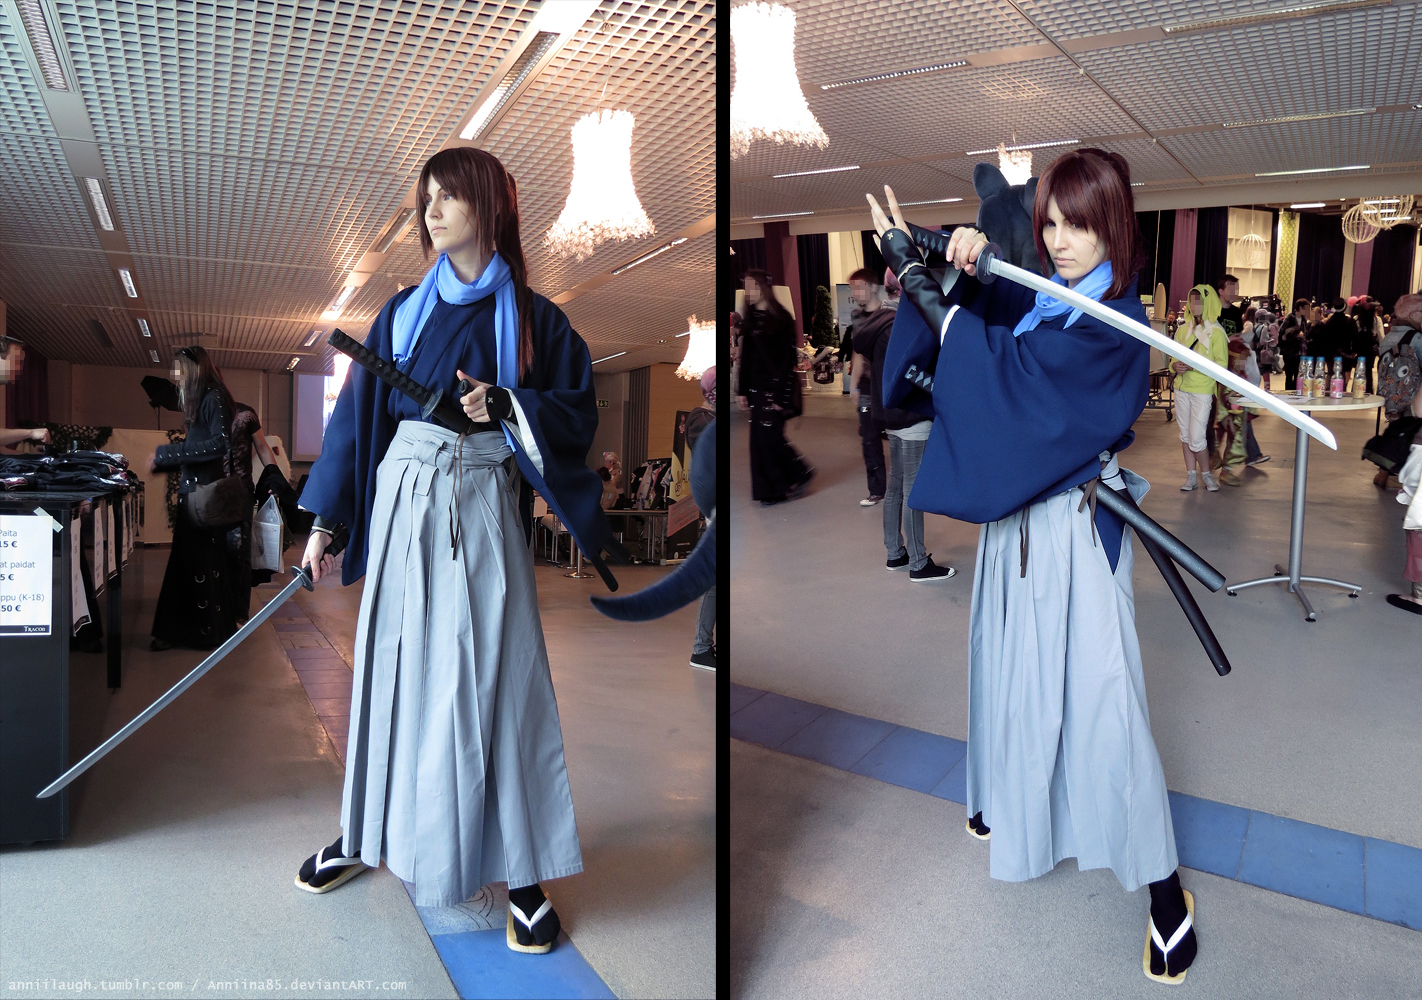 Kenshin Himura Cosplay / Rurouni Kenshin by Kathepro on DeviantArt